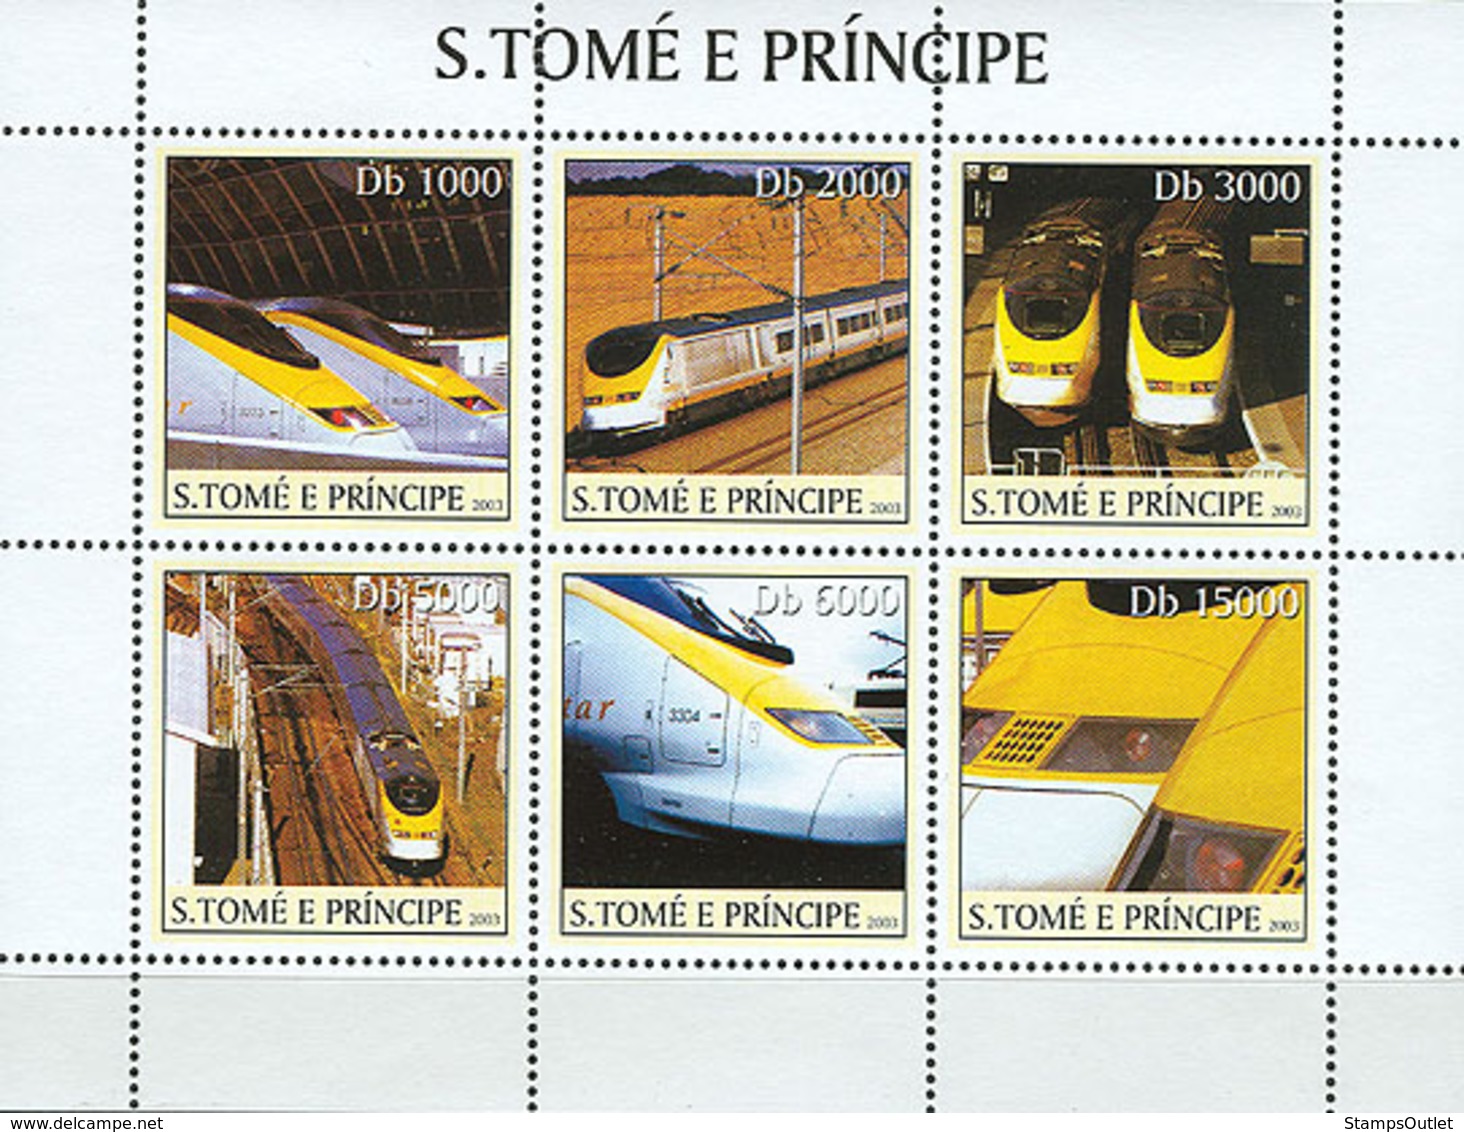 S. TOME & PRINCIPE 2003 - Eurostar Trains 6v - Sao Tome And Principe